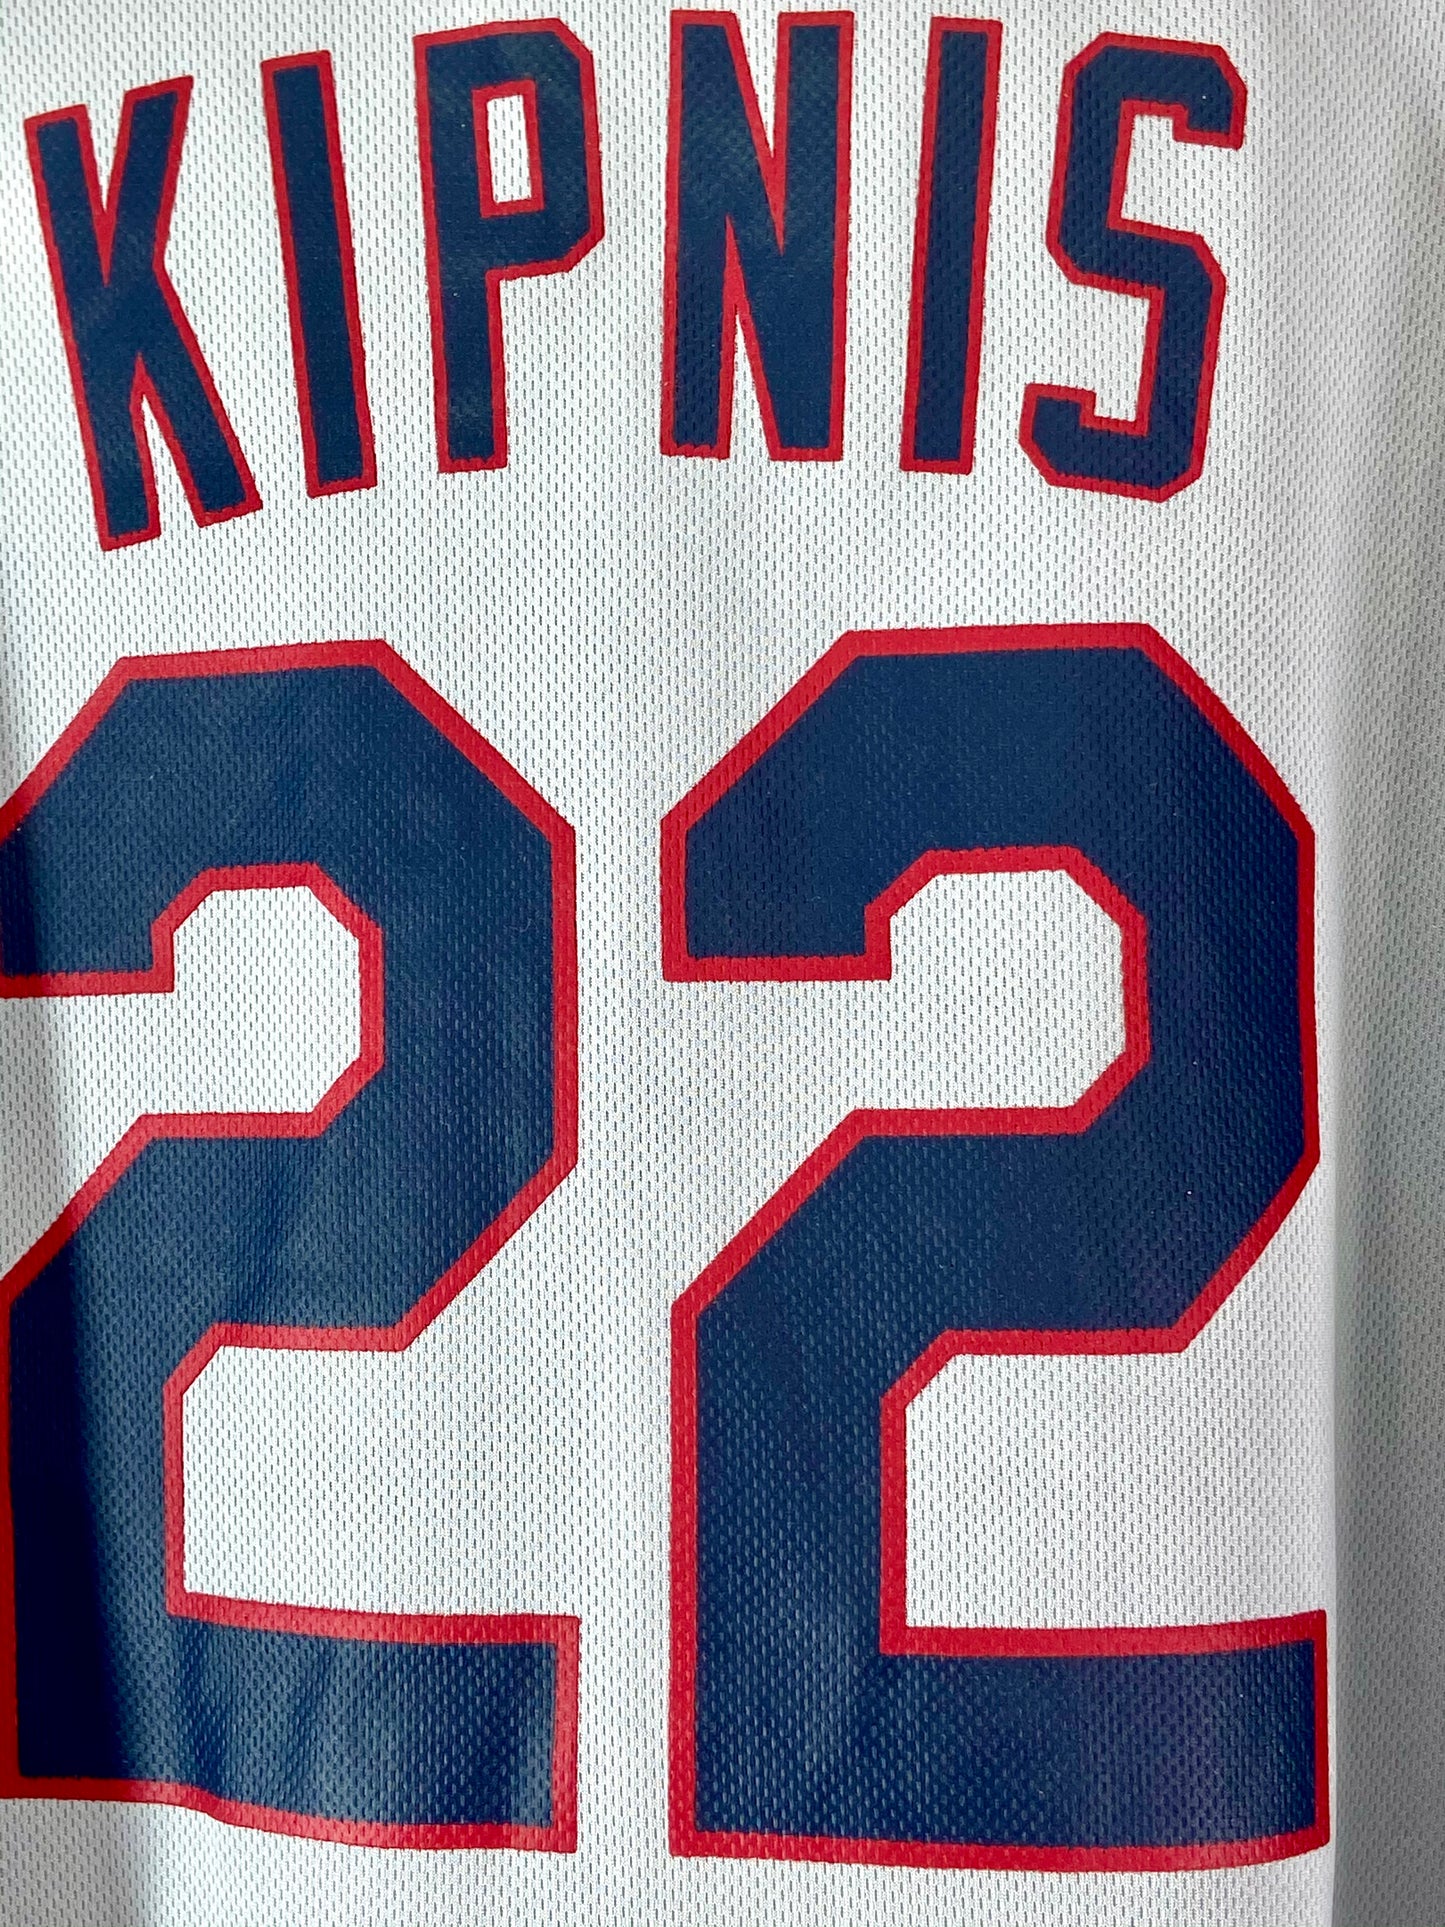 Cleveland Indians MLB Jason Kipnis Key Bank Used Promotional Jersey by Match-Up